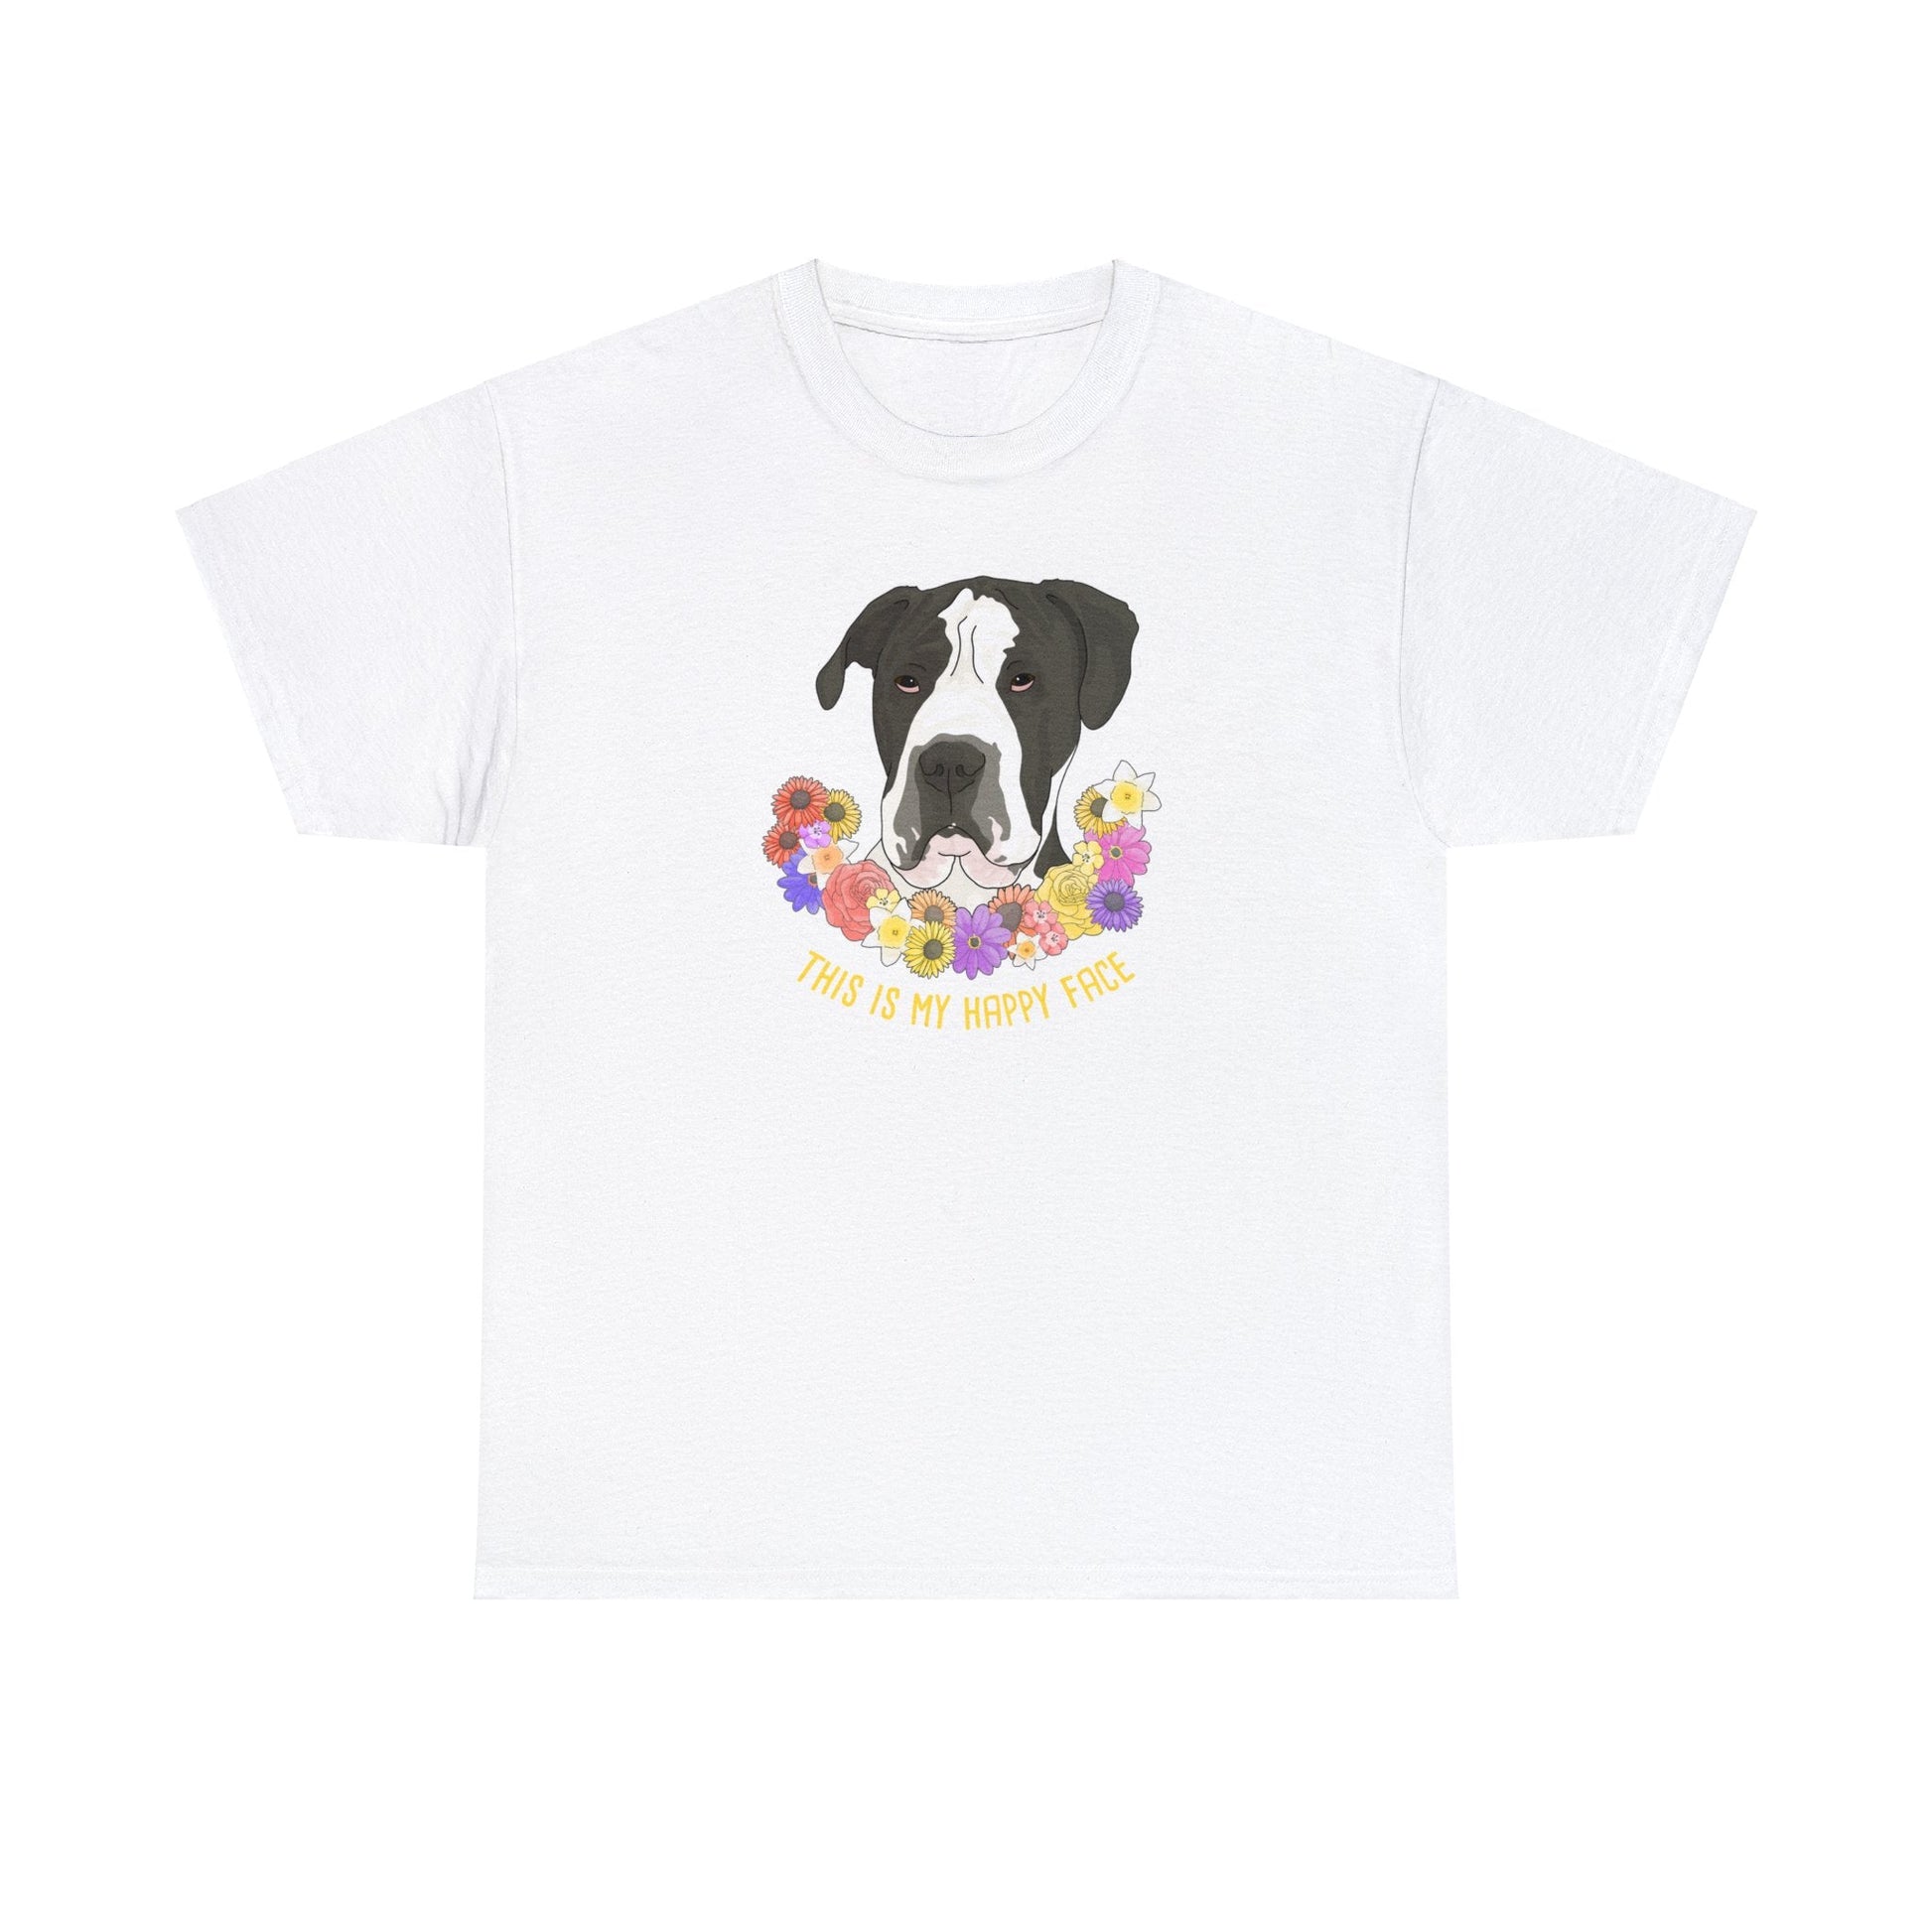 Nico | FUNDRAISER for Philly Bully Team | T-shirt - Detezi Designs-76032142365236422000